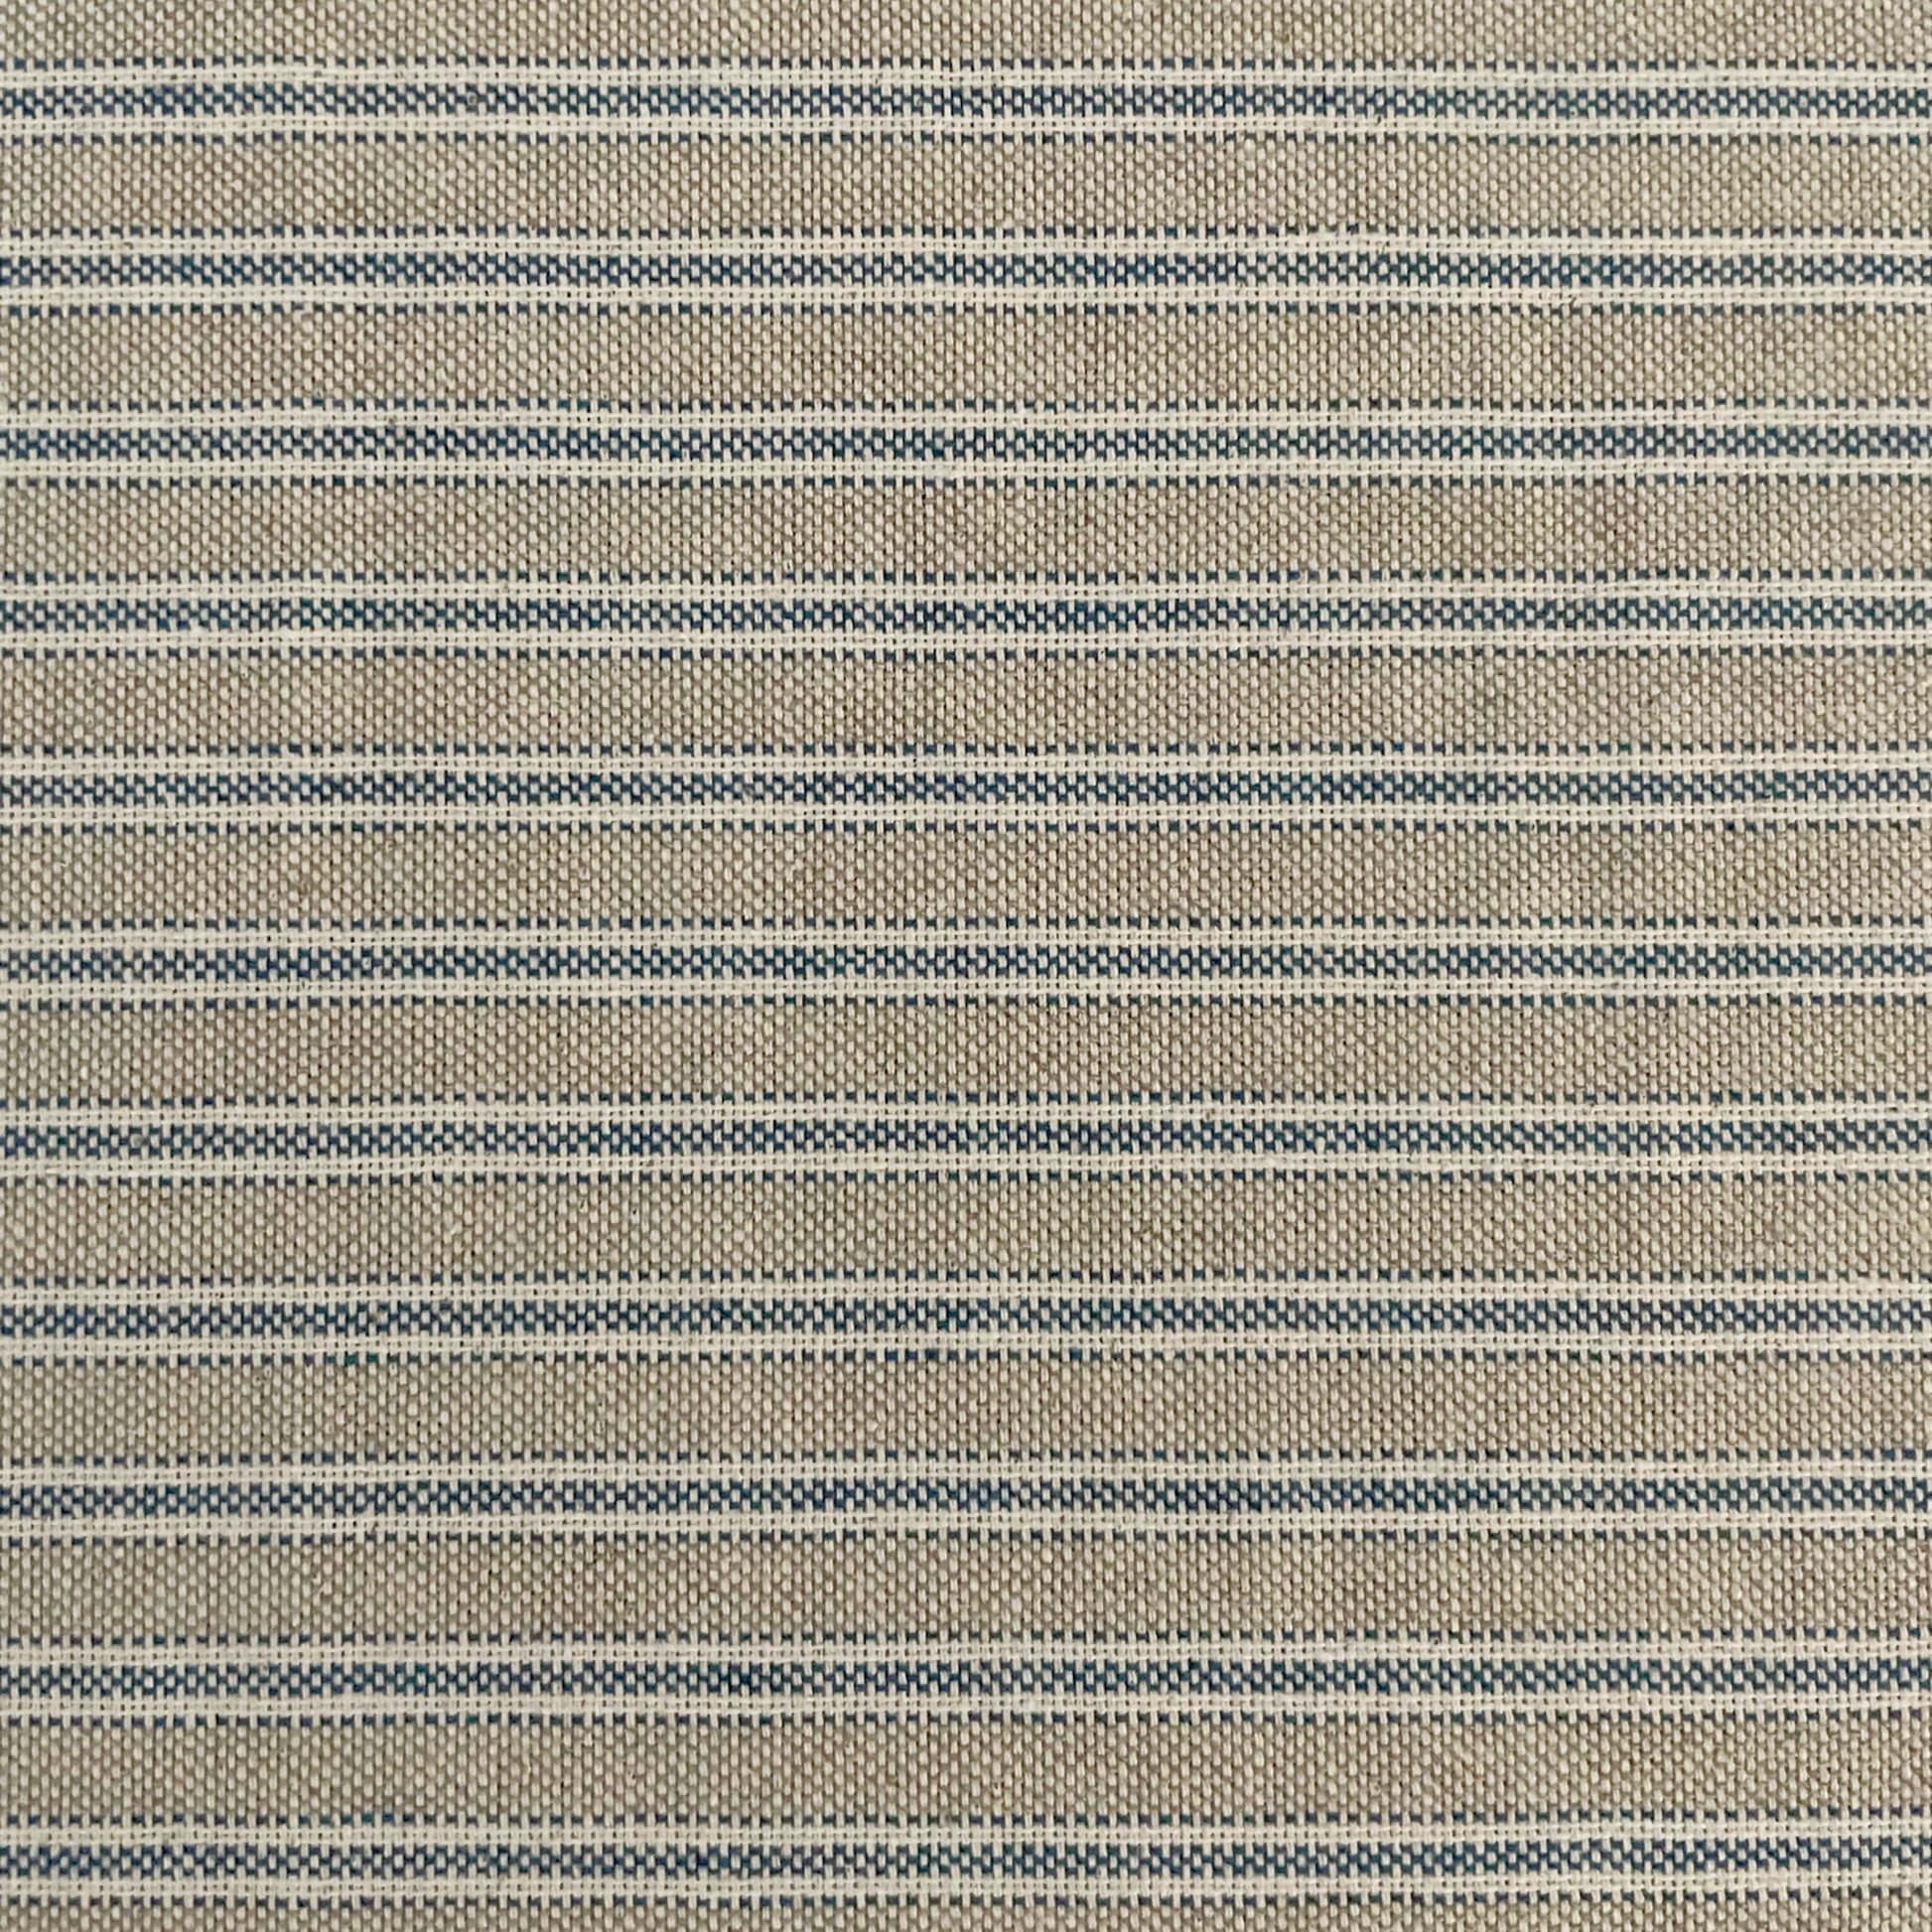 Yale Ticking Stripe Blue Double Width Room Fabric